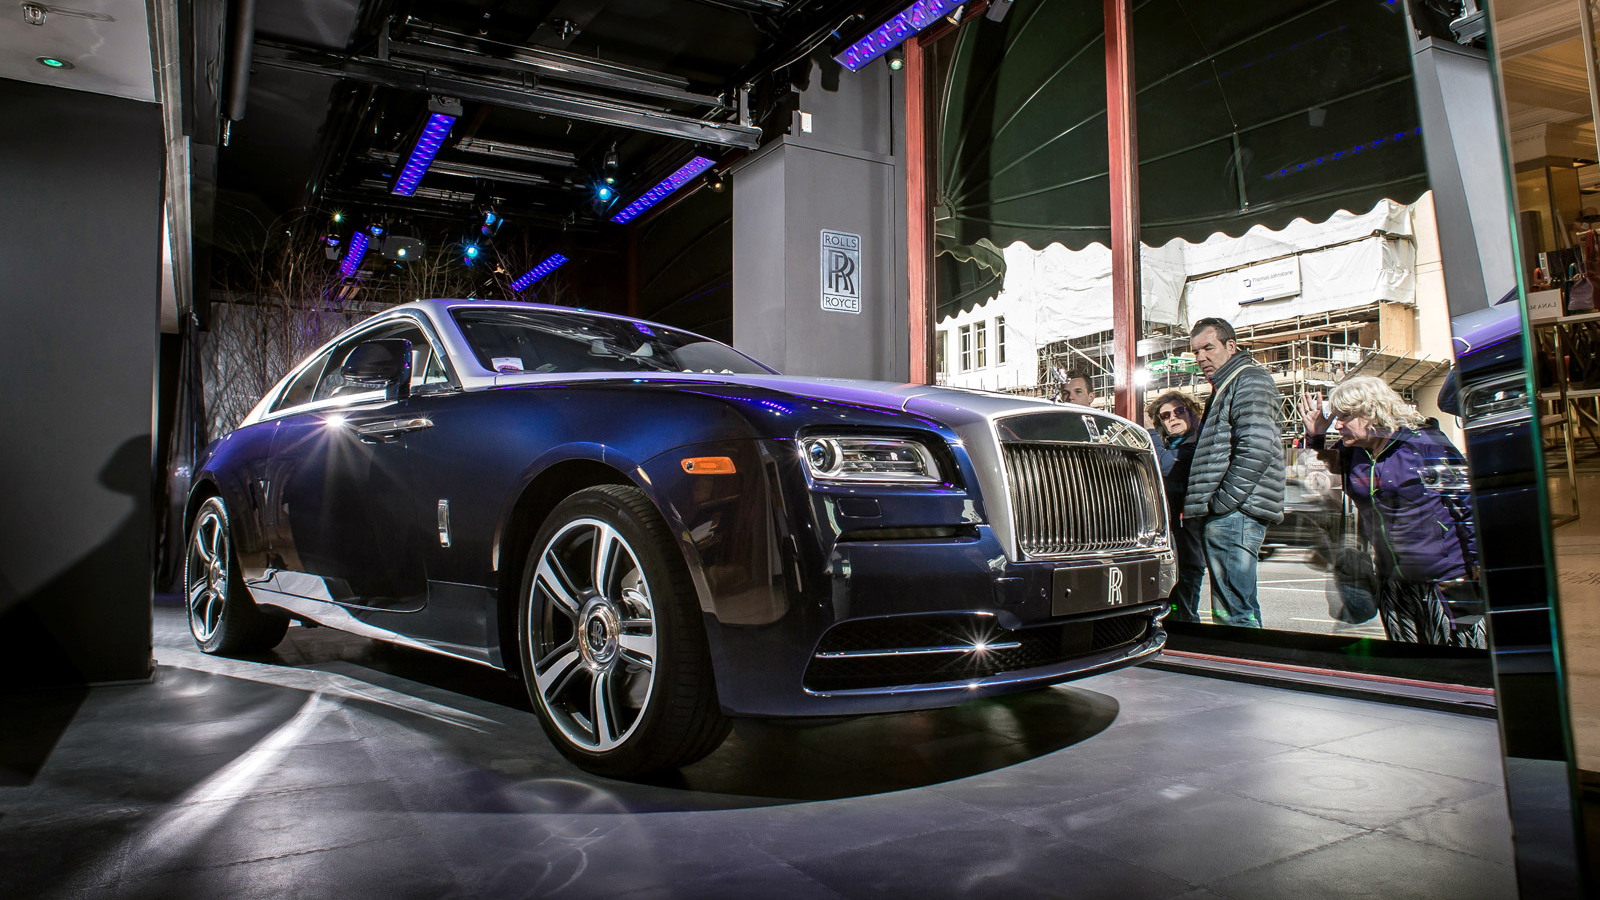 2014 Rolls-Royce Wraith at Harrods, London